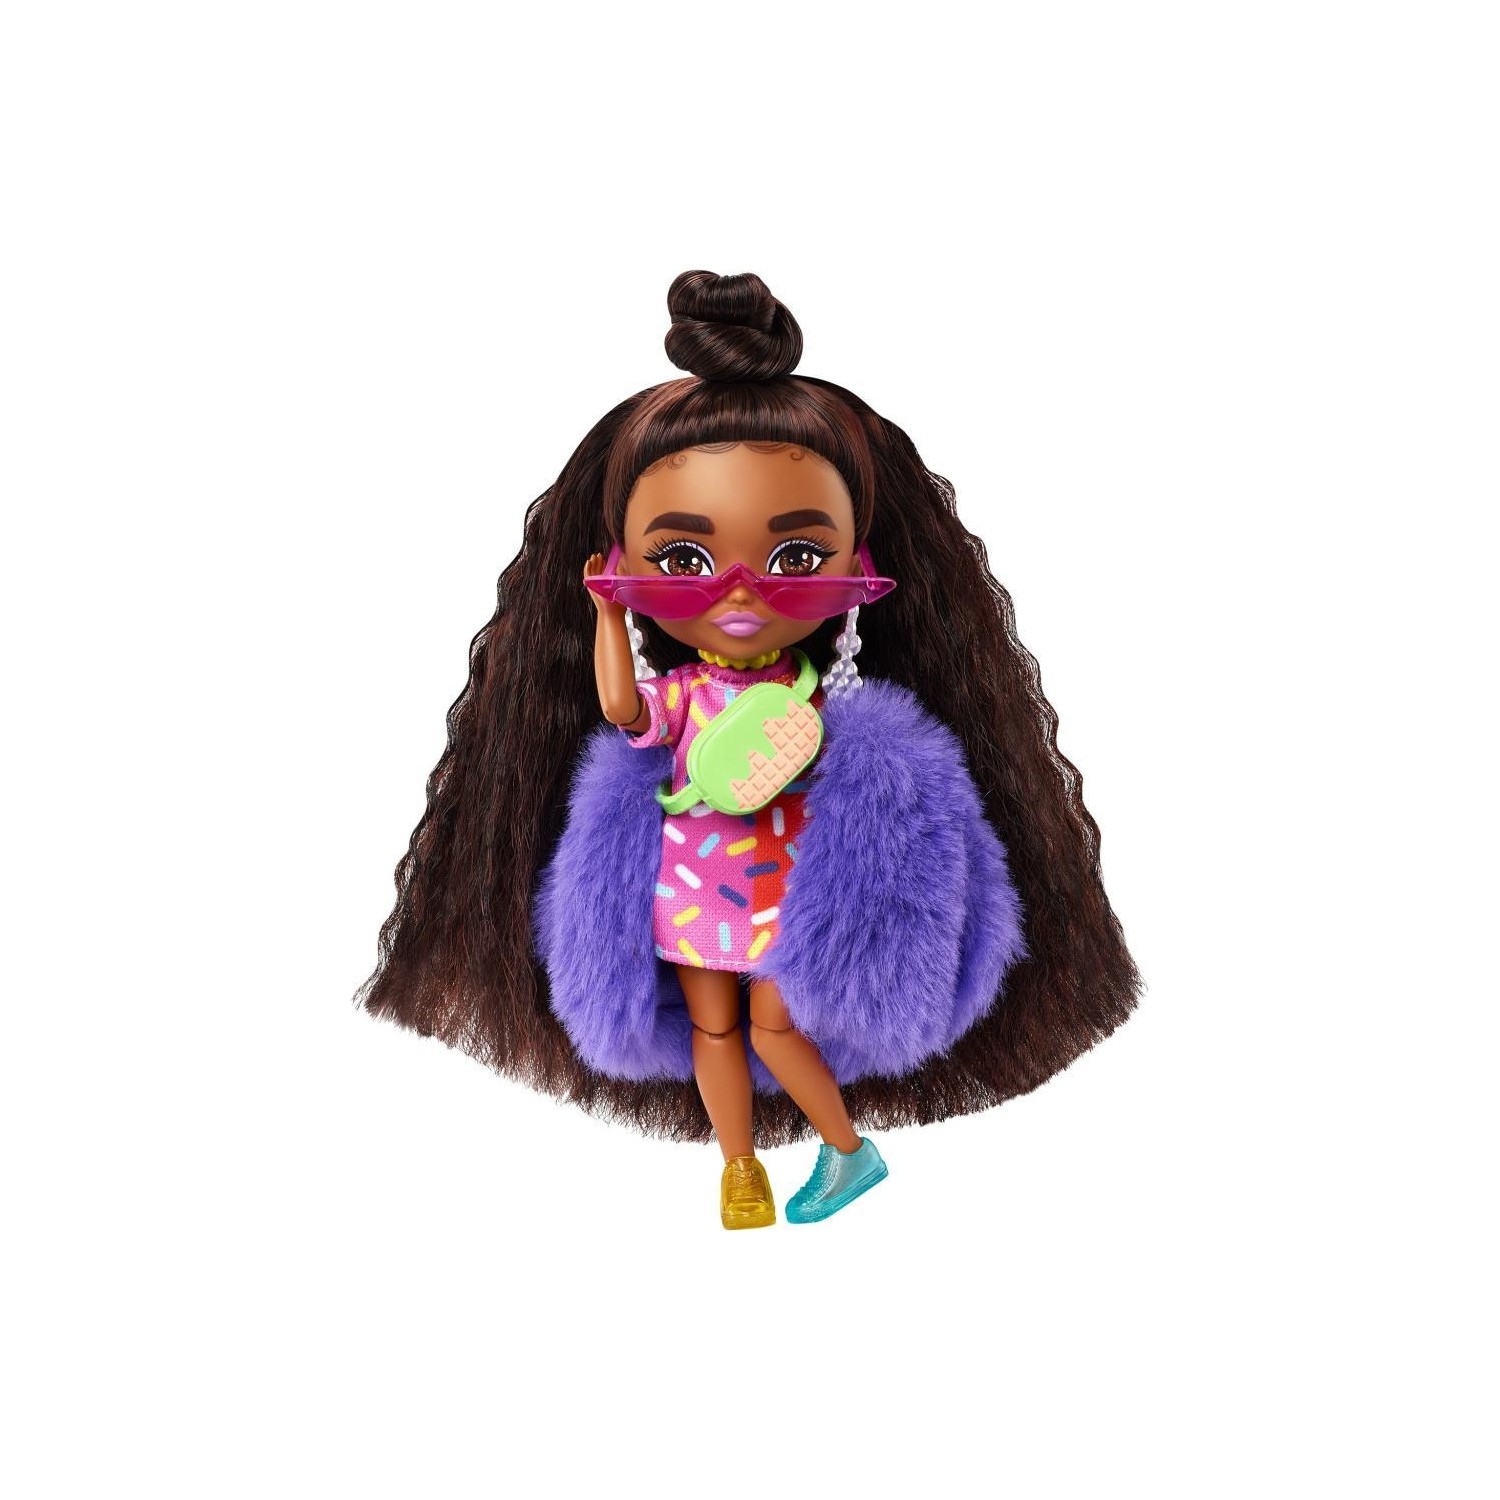 Экстра Мини Кукла Barbie HGP62 кукла barbie экстра hgp62 брюнетка со светлыми прядями